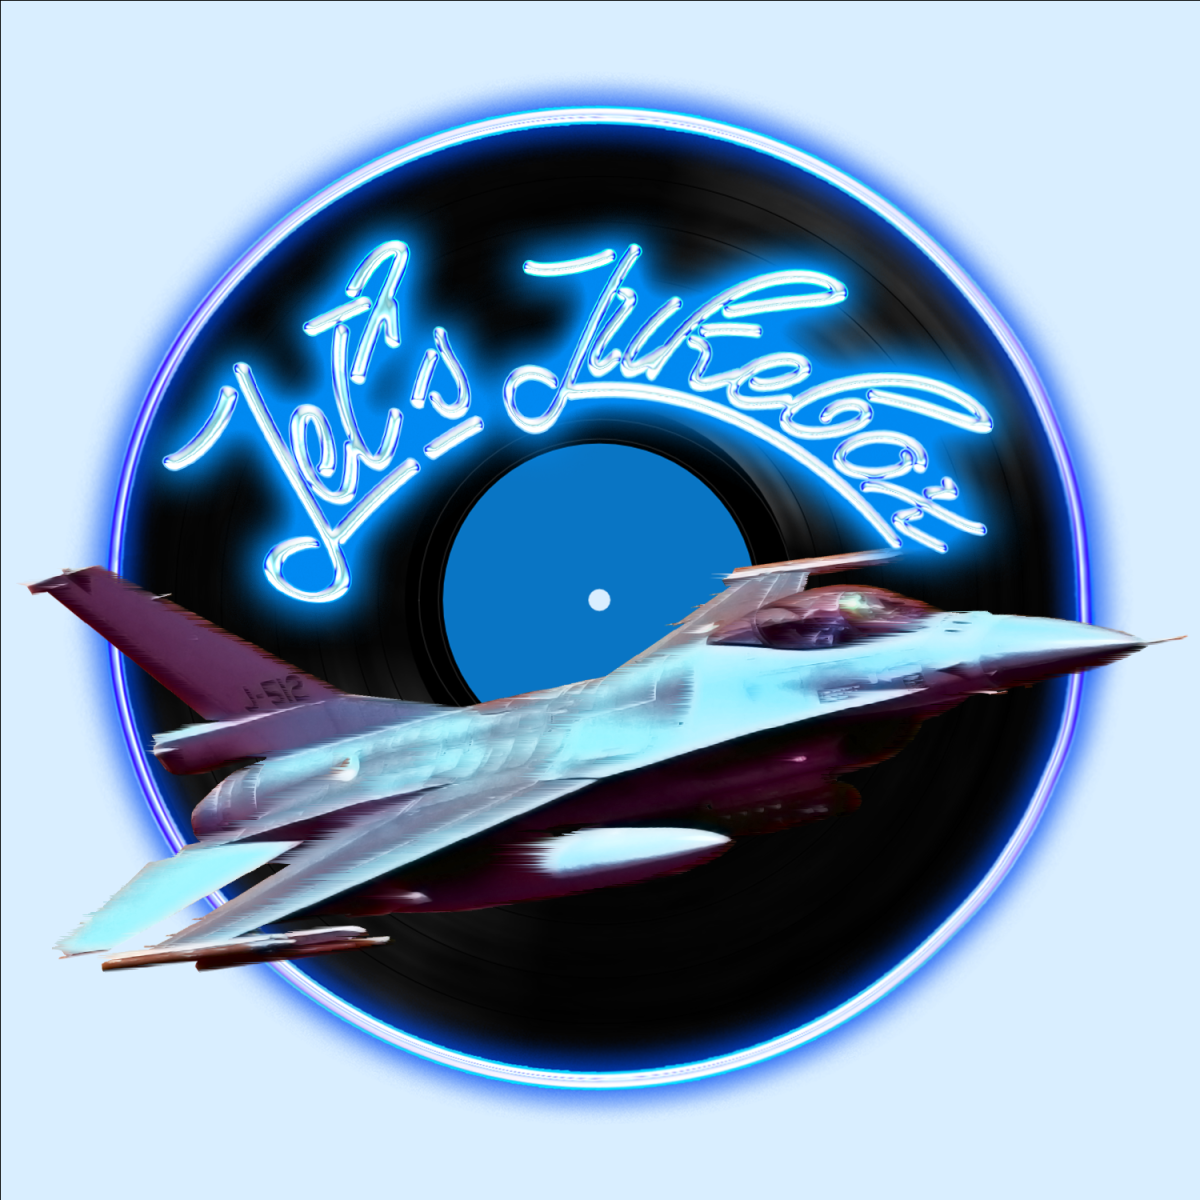 [Podcast] Jets Jukebox Episode 1: Bleachers, Self-Titled